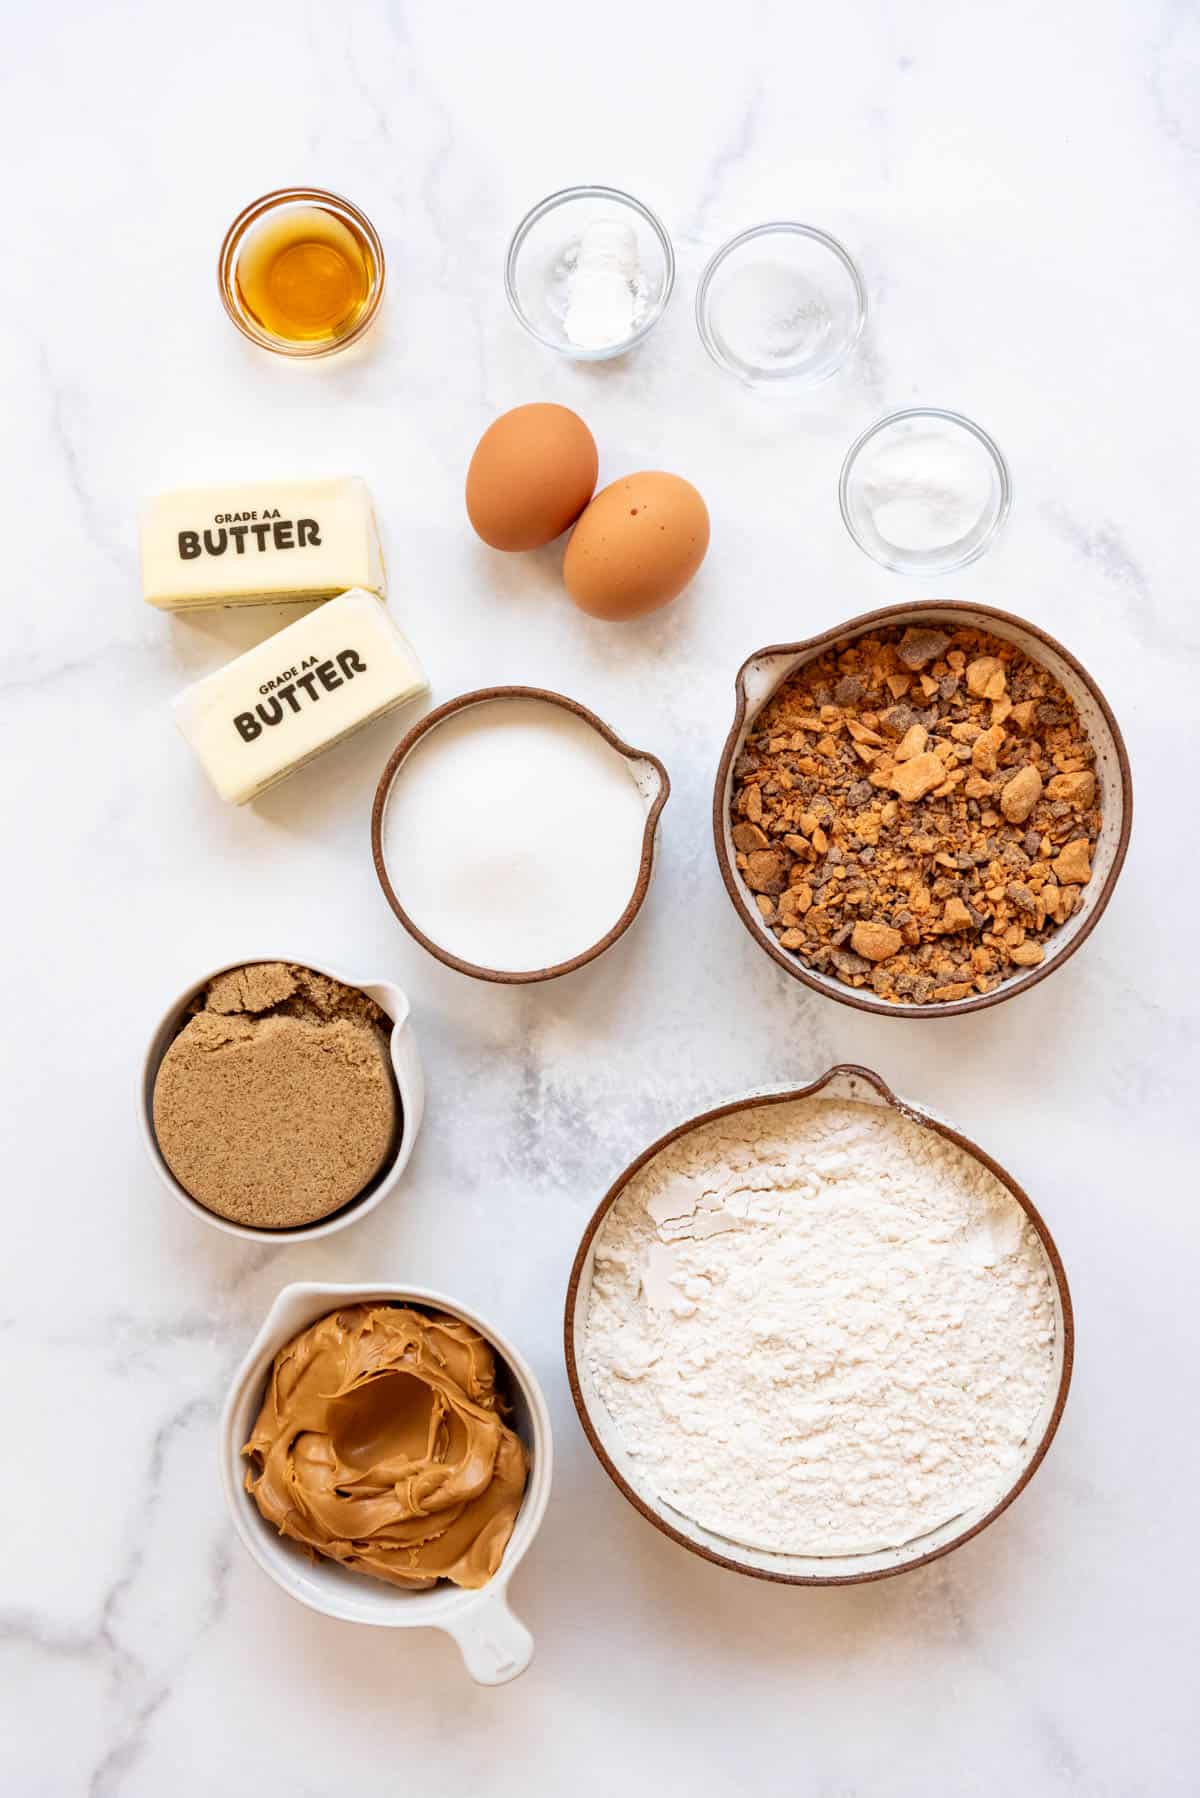 Ingredients for butterfinger cookies.